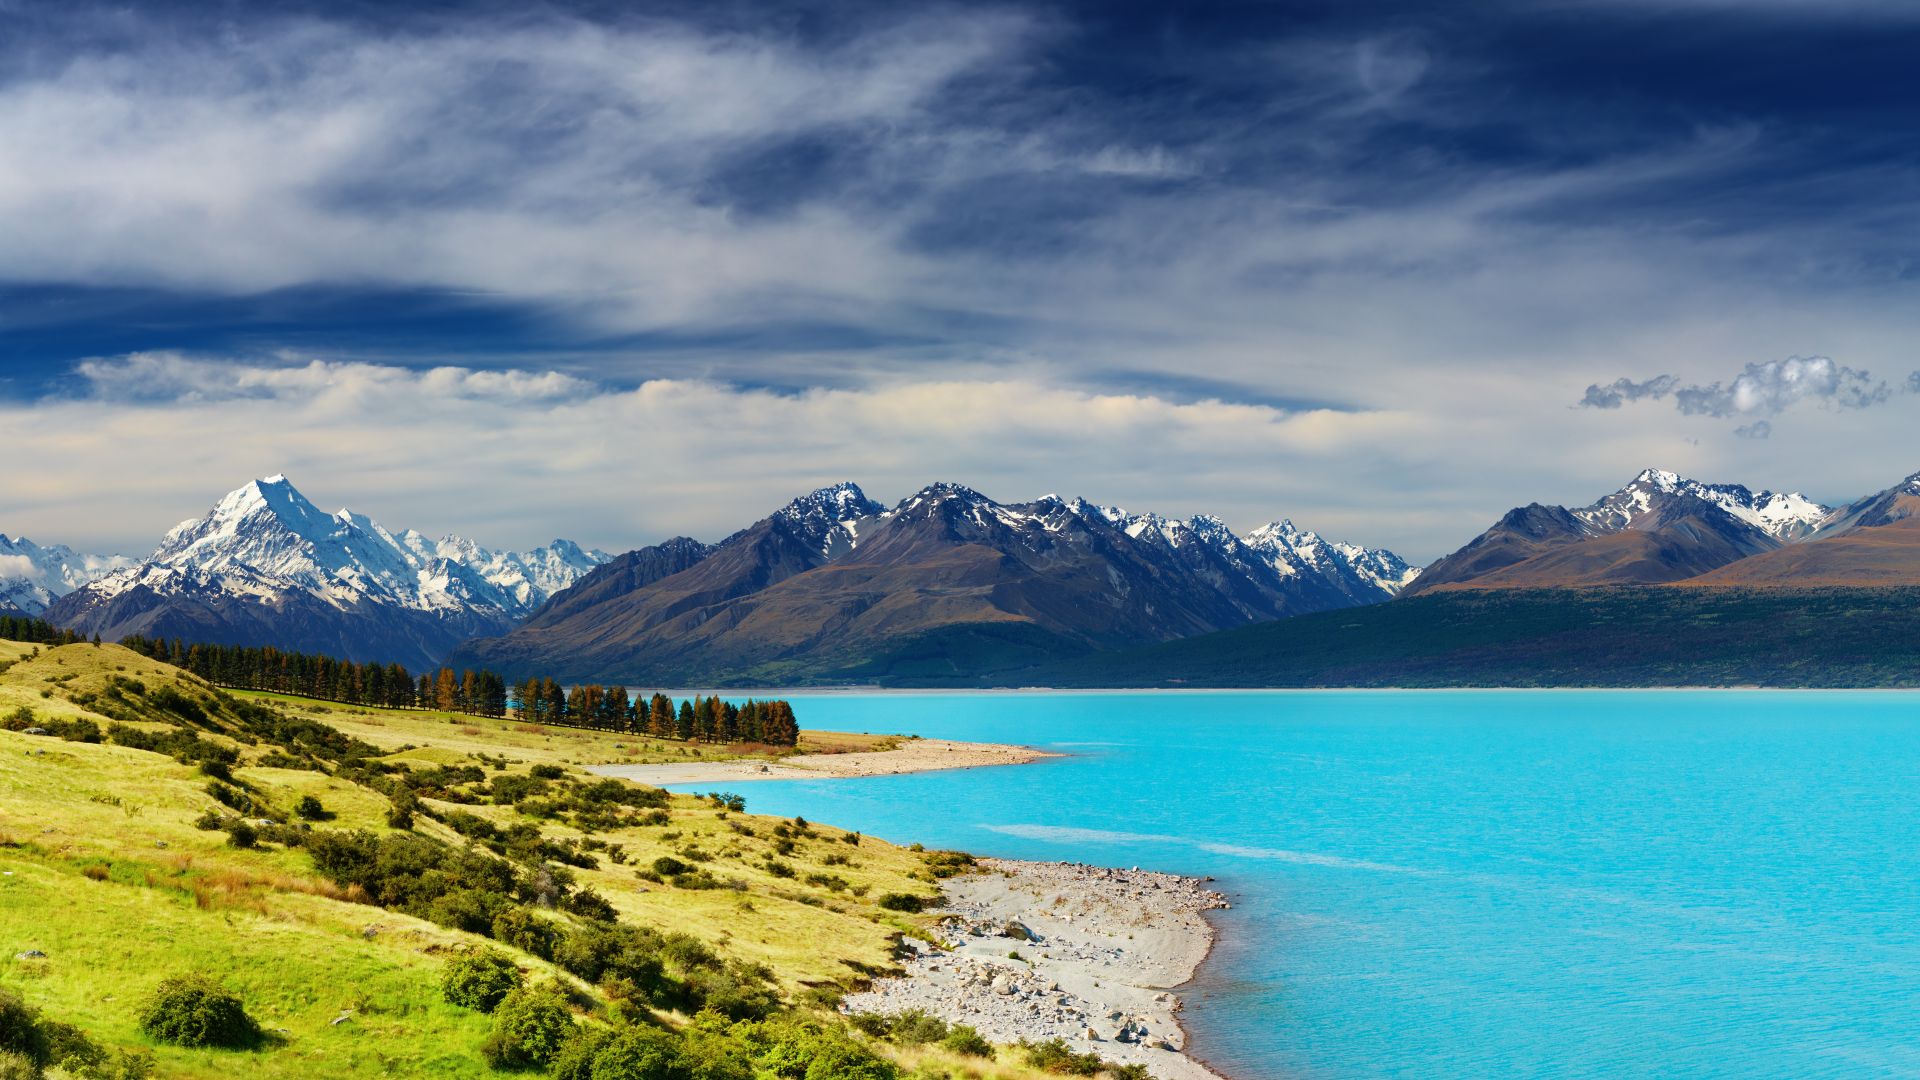 New Zealand, river, mountains, 5k (horizontal)